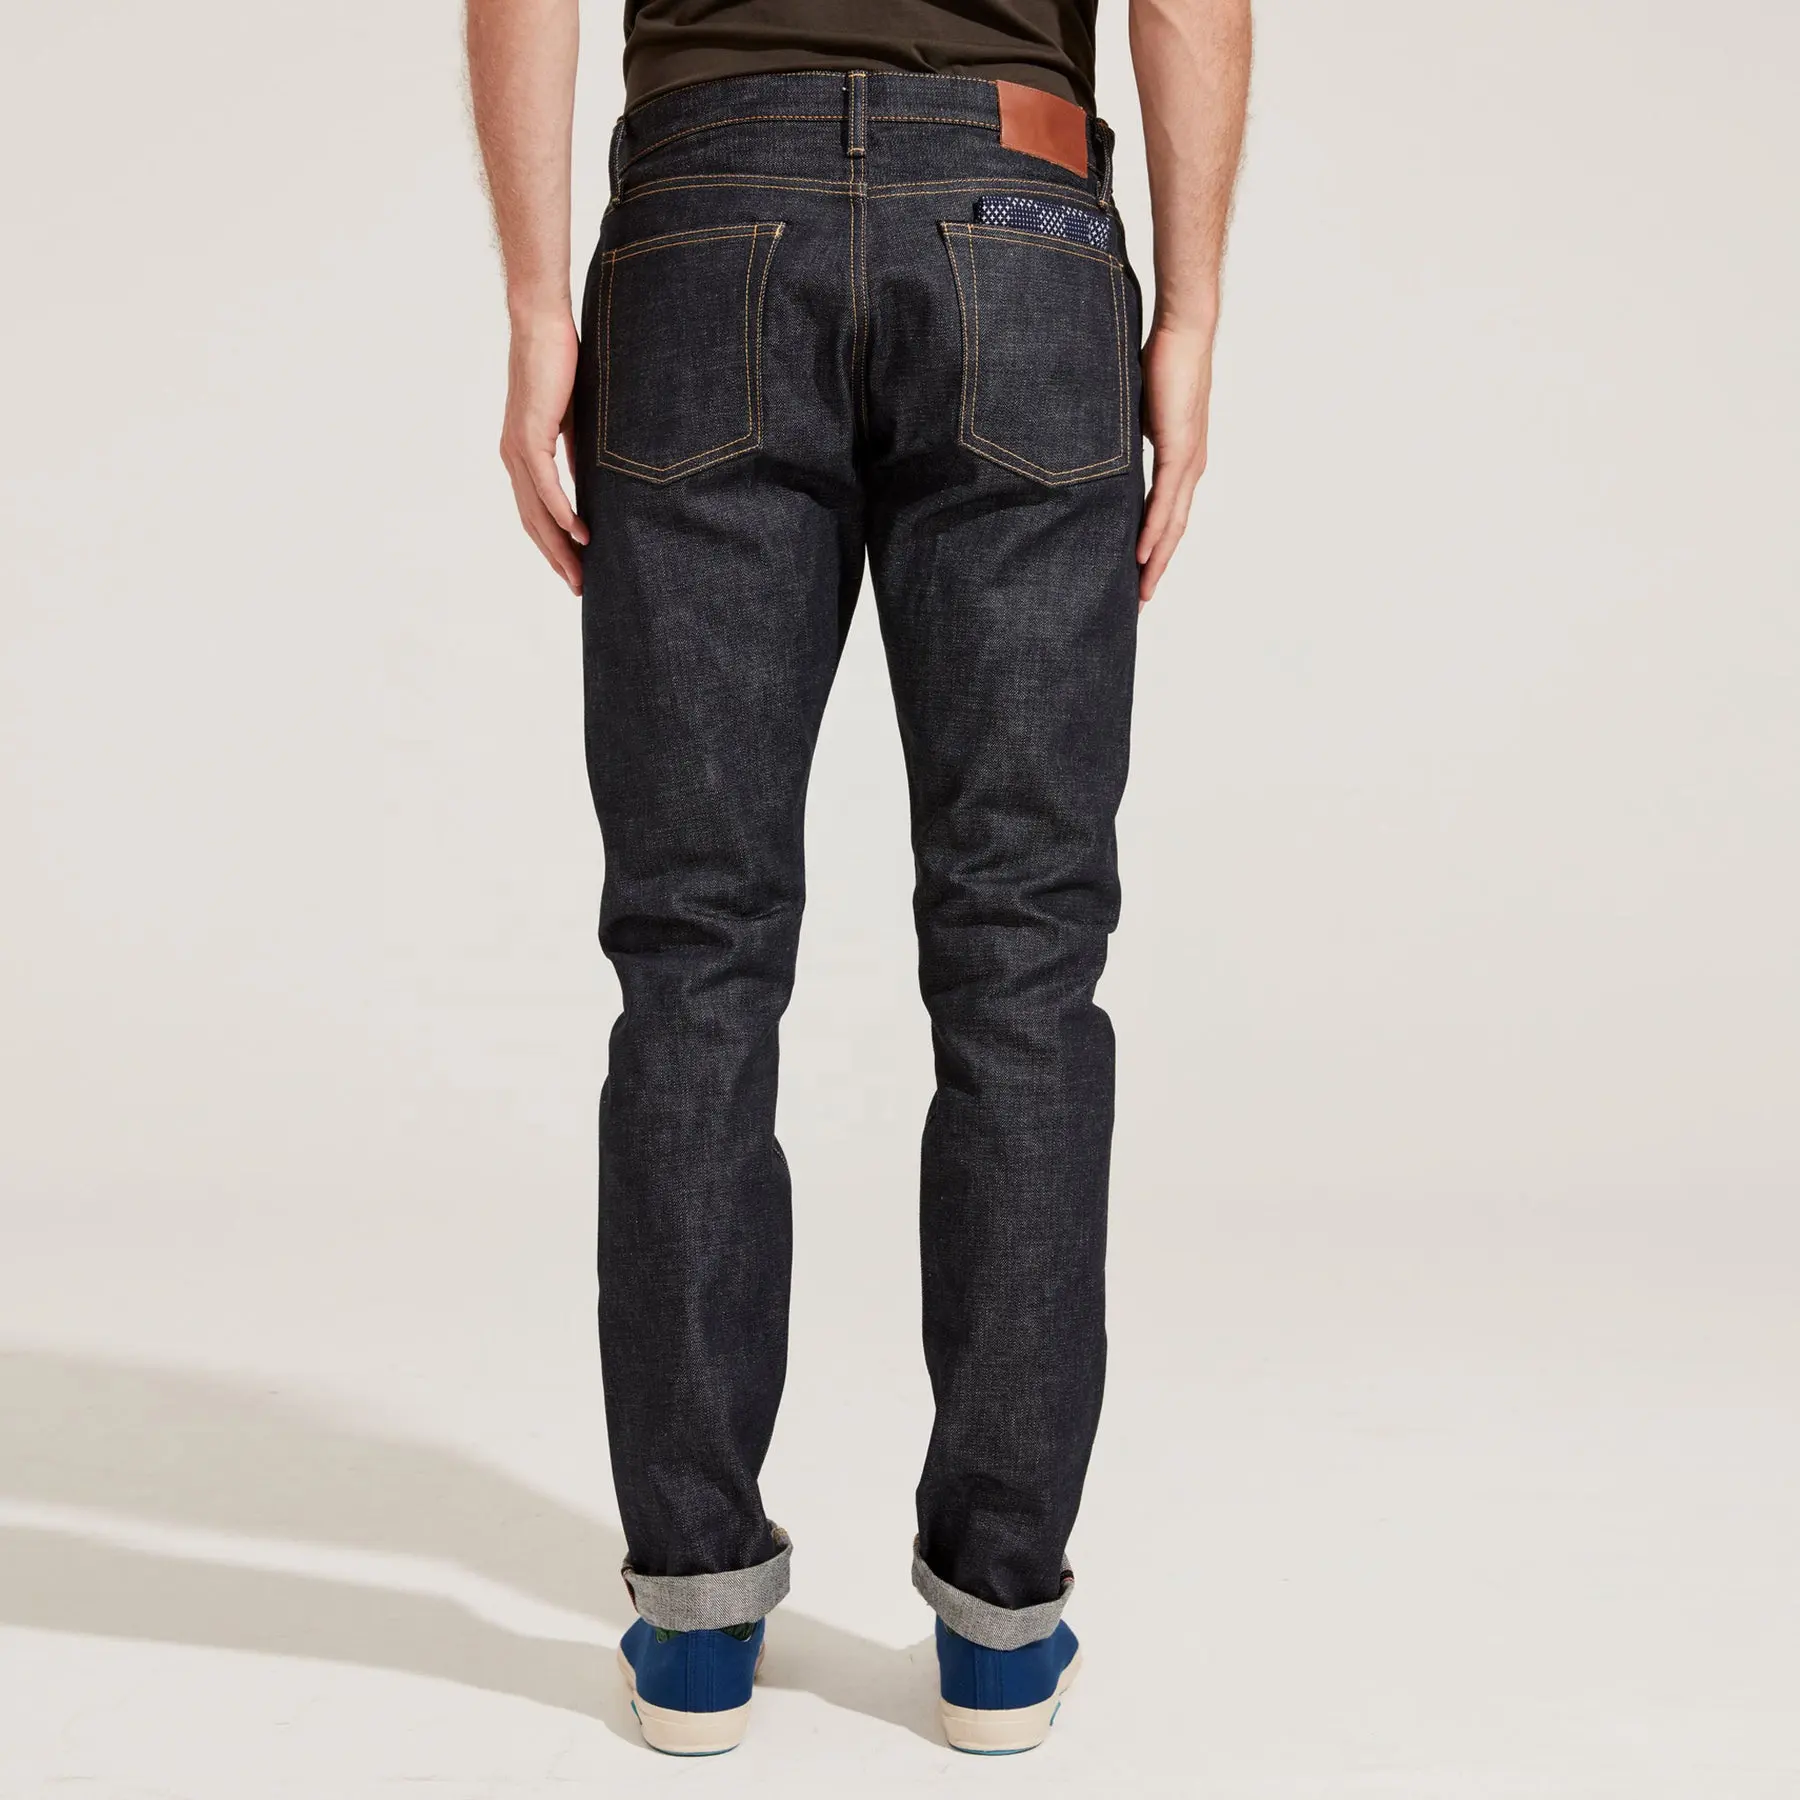 Blue Team menyesuaikan logo 2023 selvedge 13.5oz denim jeans pria reguler jeans lelaki raw selvedge denim jeans kurus